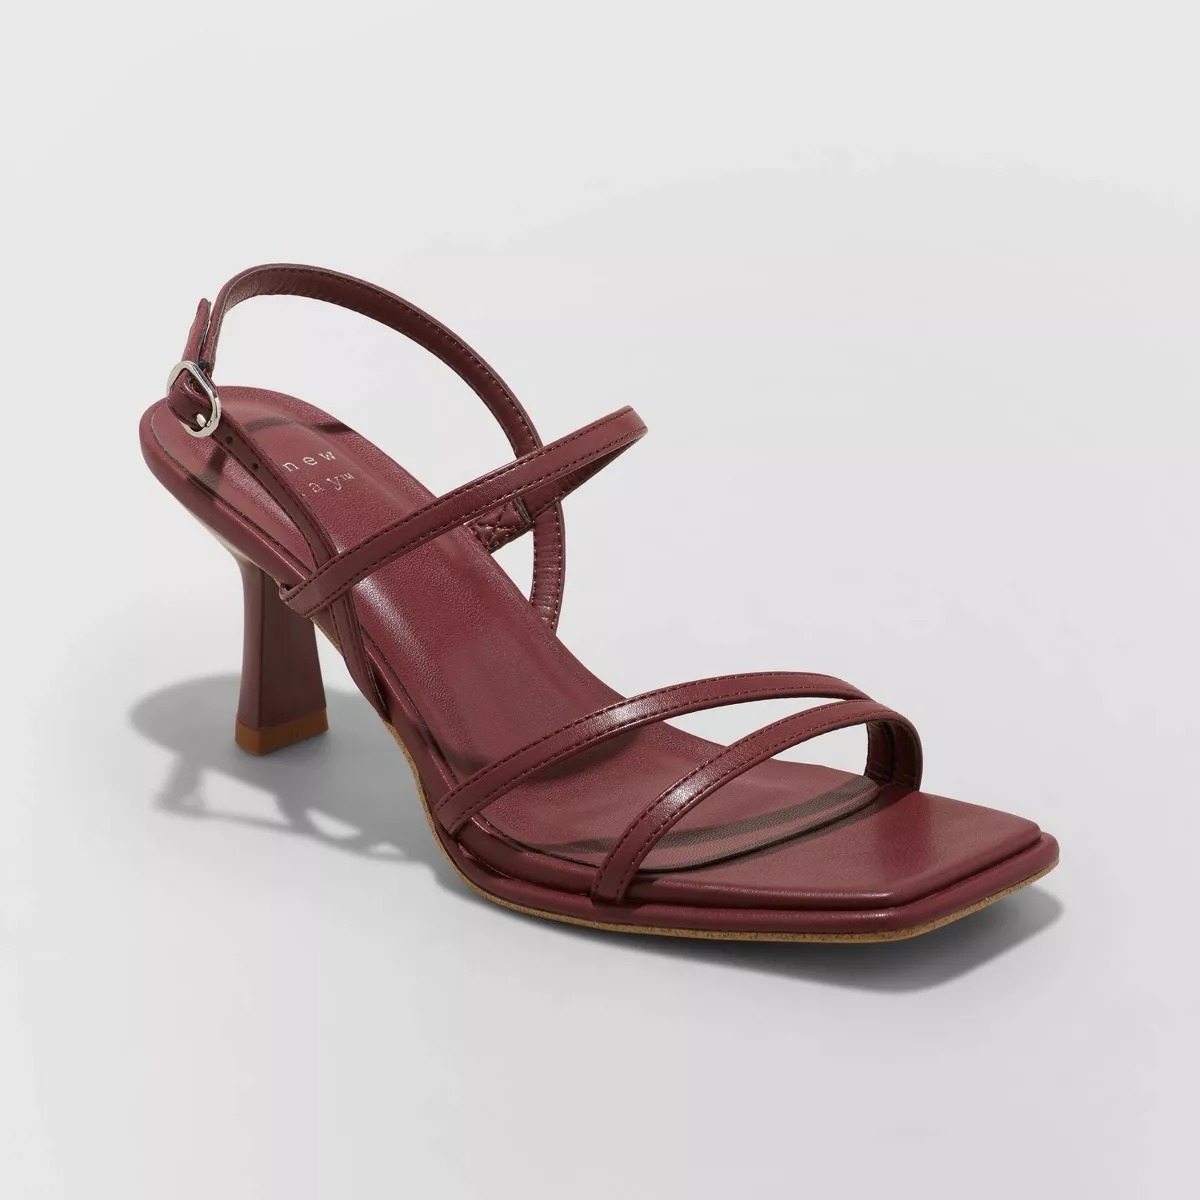 strappy heels in maroon